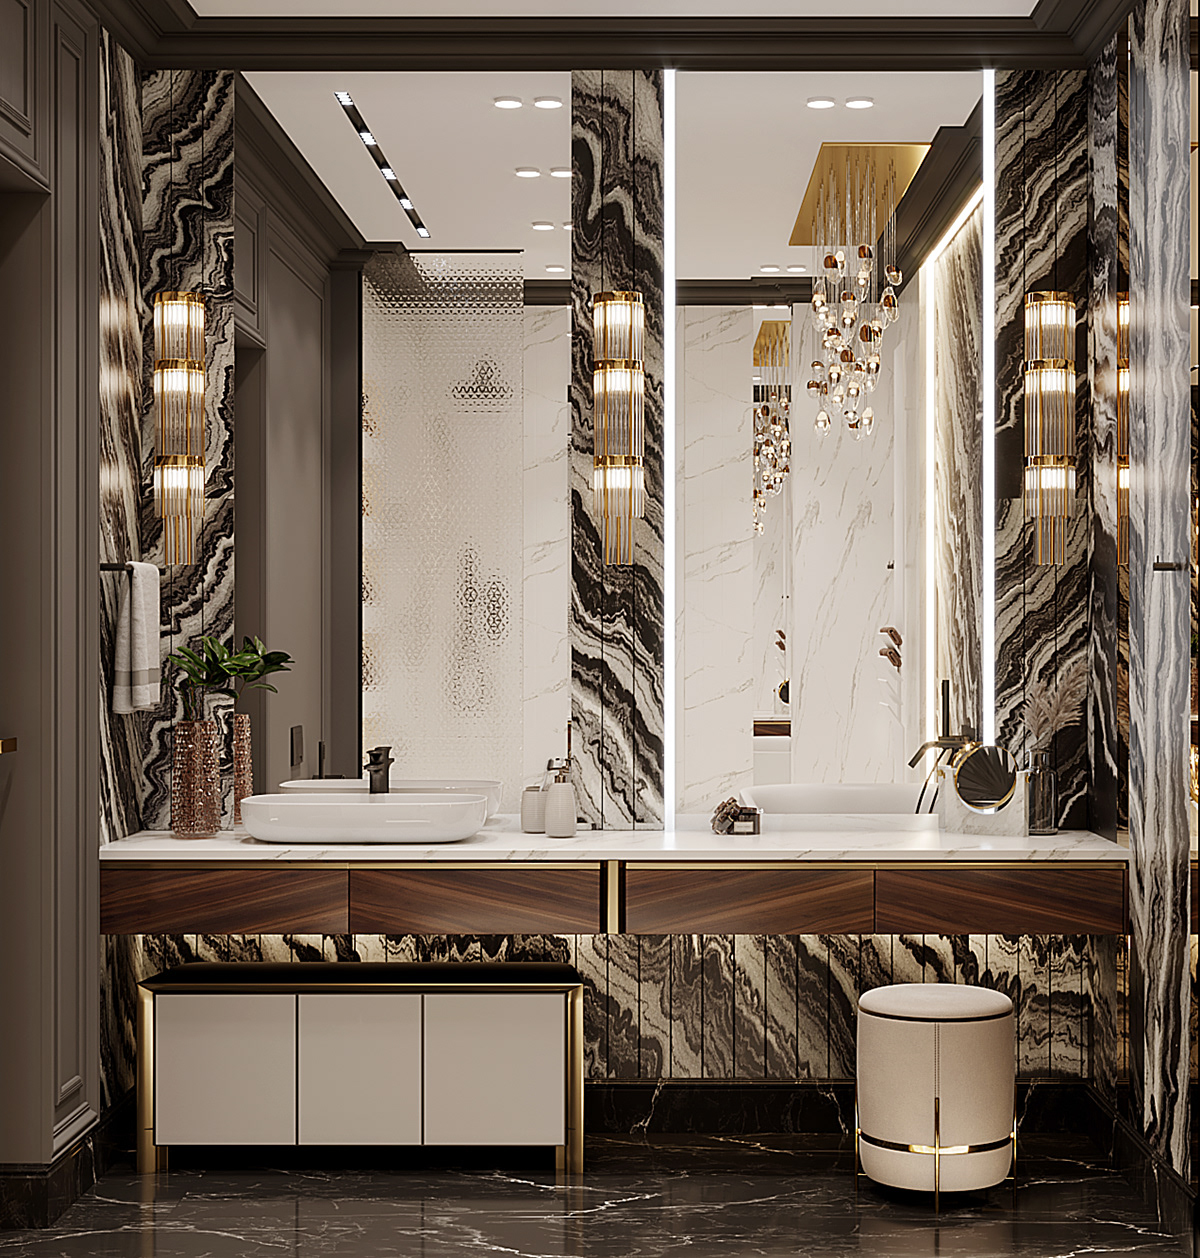 3ds max bedroom luxury Render visualization дизайн интерьера